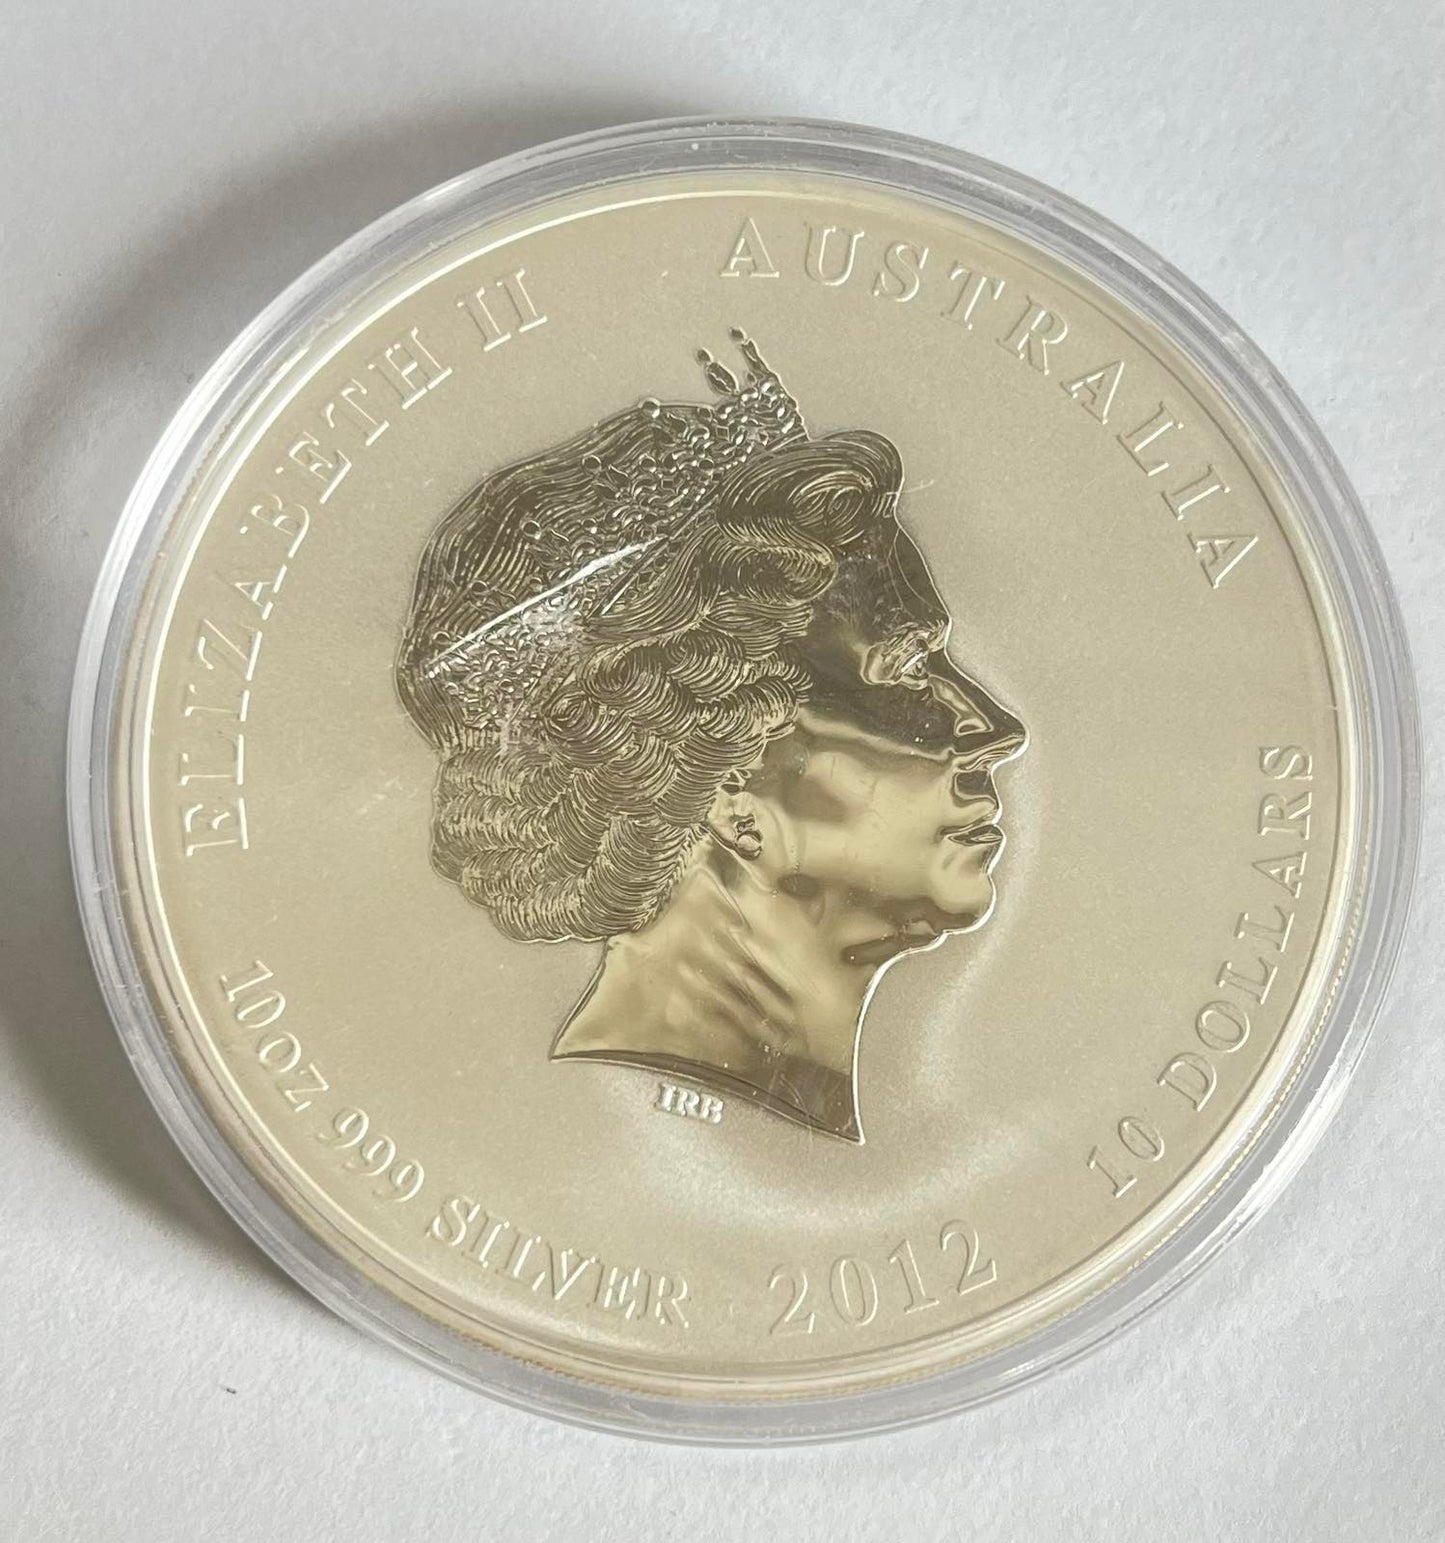 2012 Australia Lunar Dragon 10 oz Silver Coin BU in Capsule